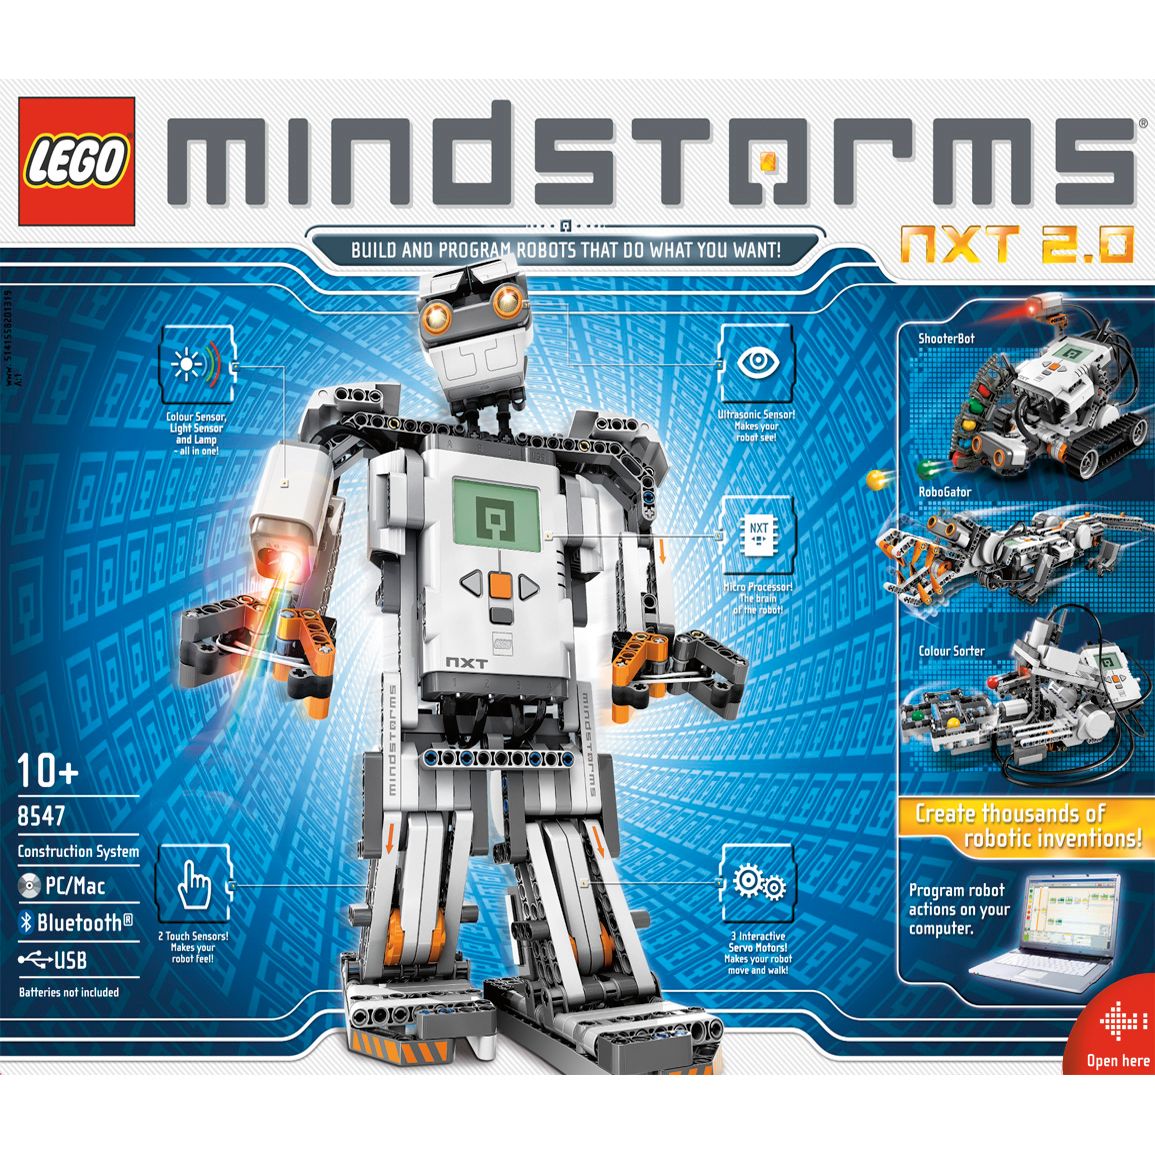 Lego Mindstorms NXT 2.0 at John Lewis